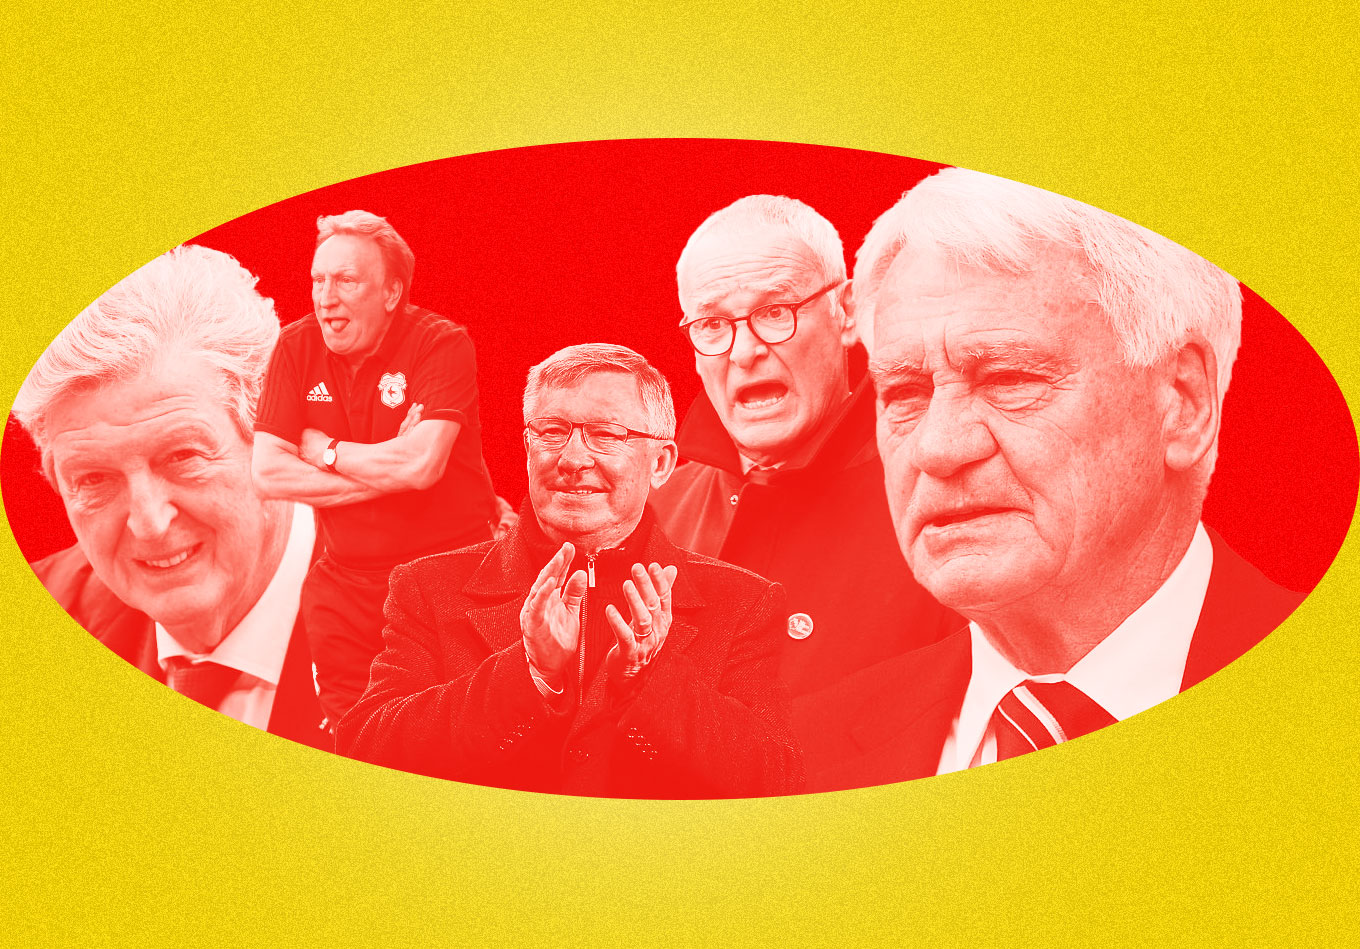 The Oldest Premier League Managers